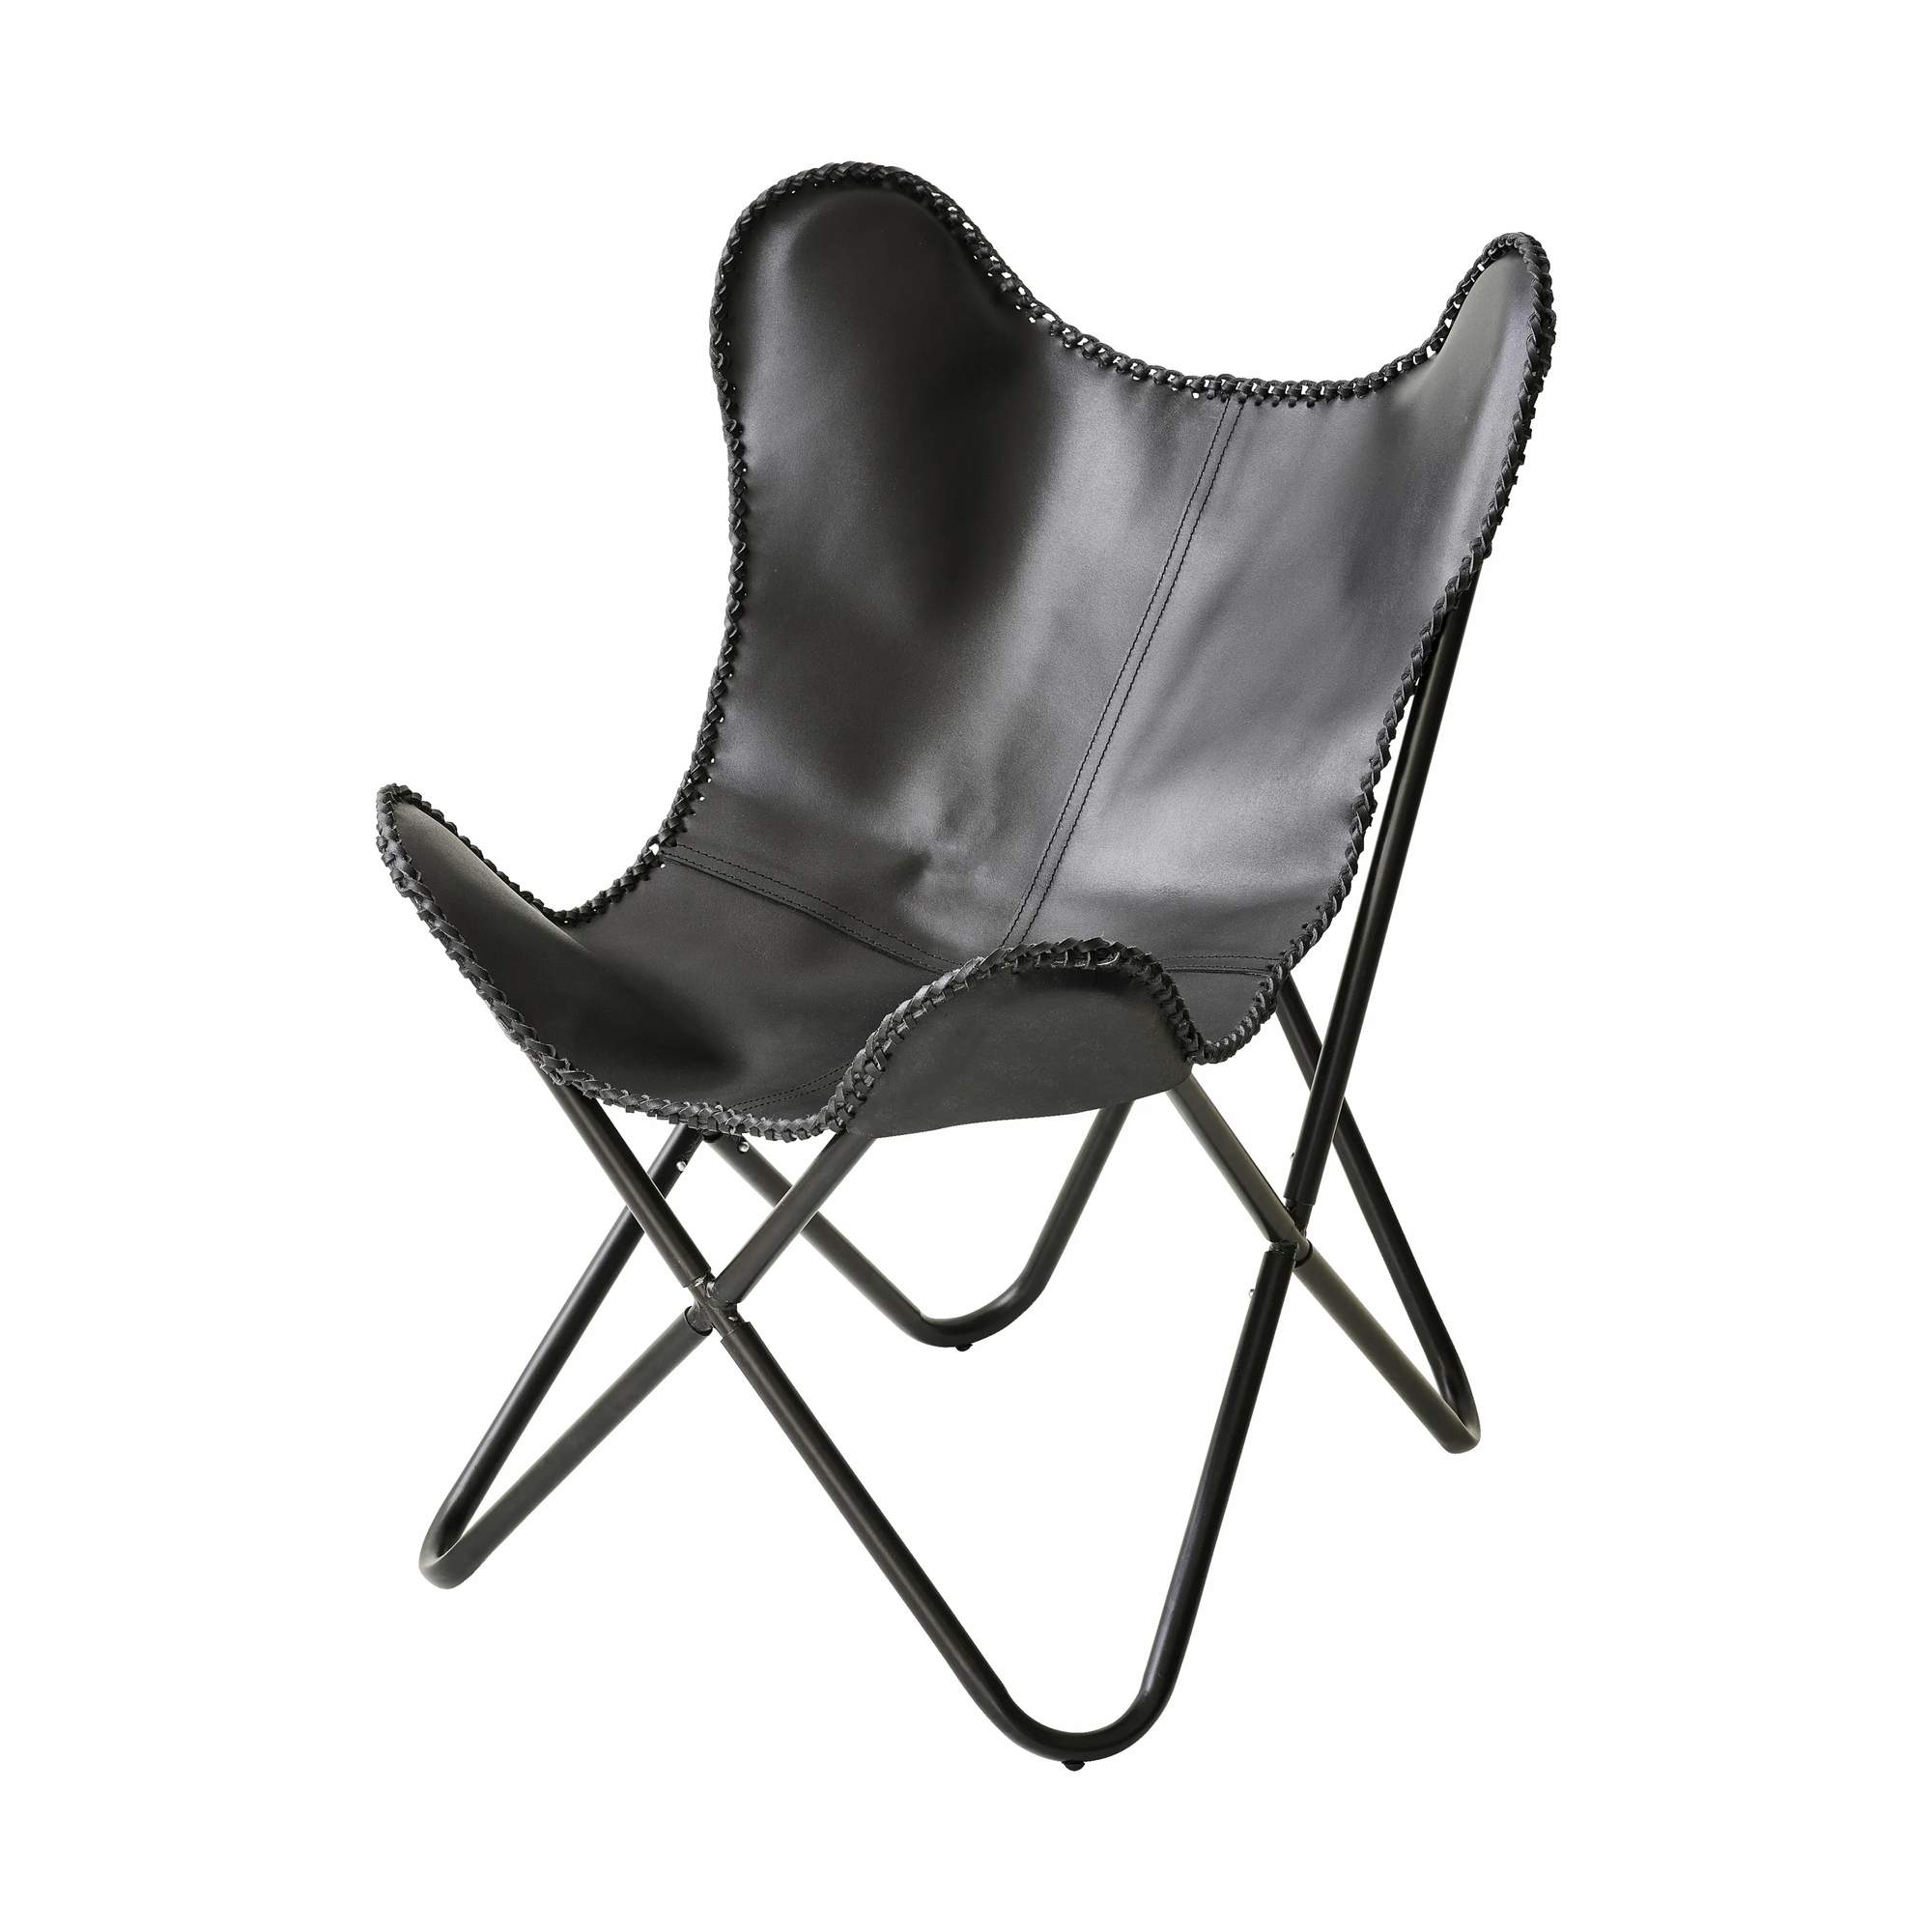 Imerco Home - Flagermusstol til børn - 74 x B 53 60 cm - Læder/metal - Sort Imerco